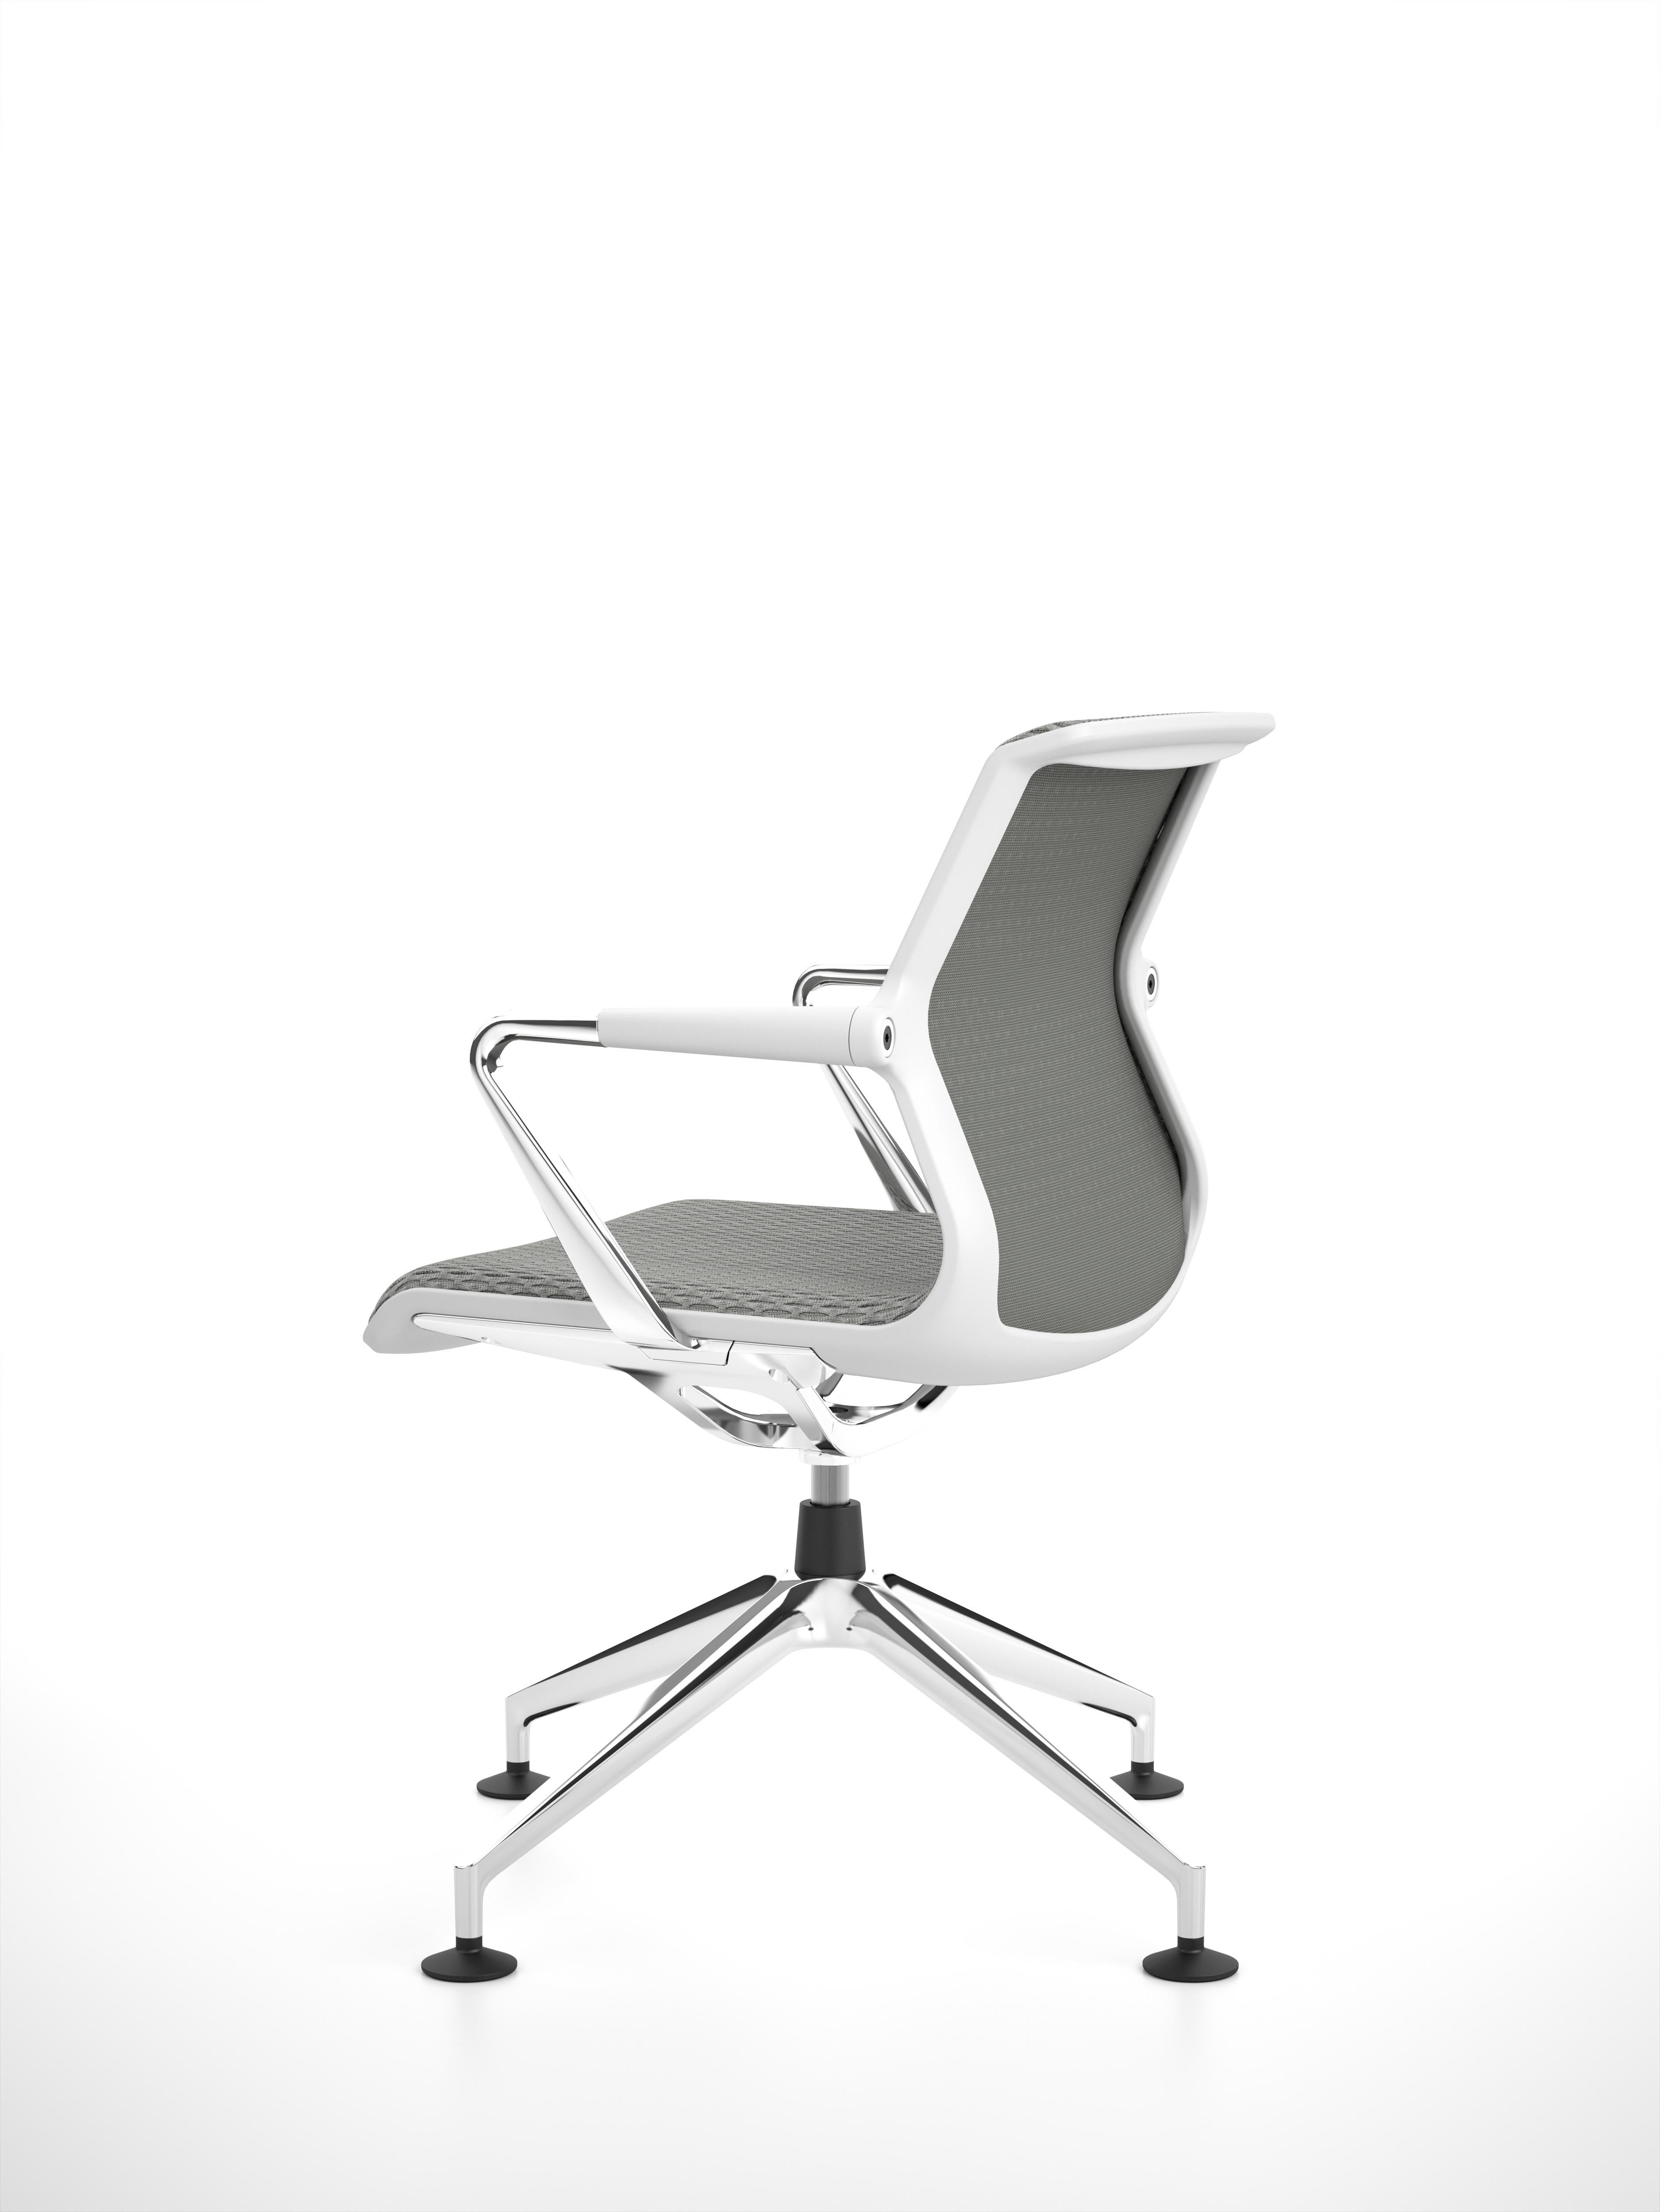 Swiss Vitra Unix Four-Star Base Chair in Mauve Grey Diamond Mesh by Antonio Citterio For Sale